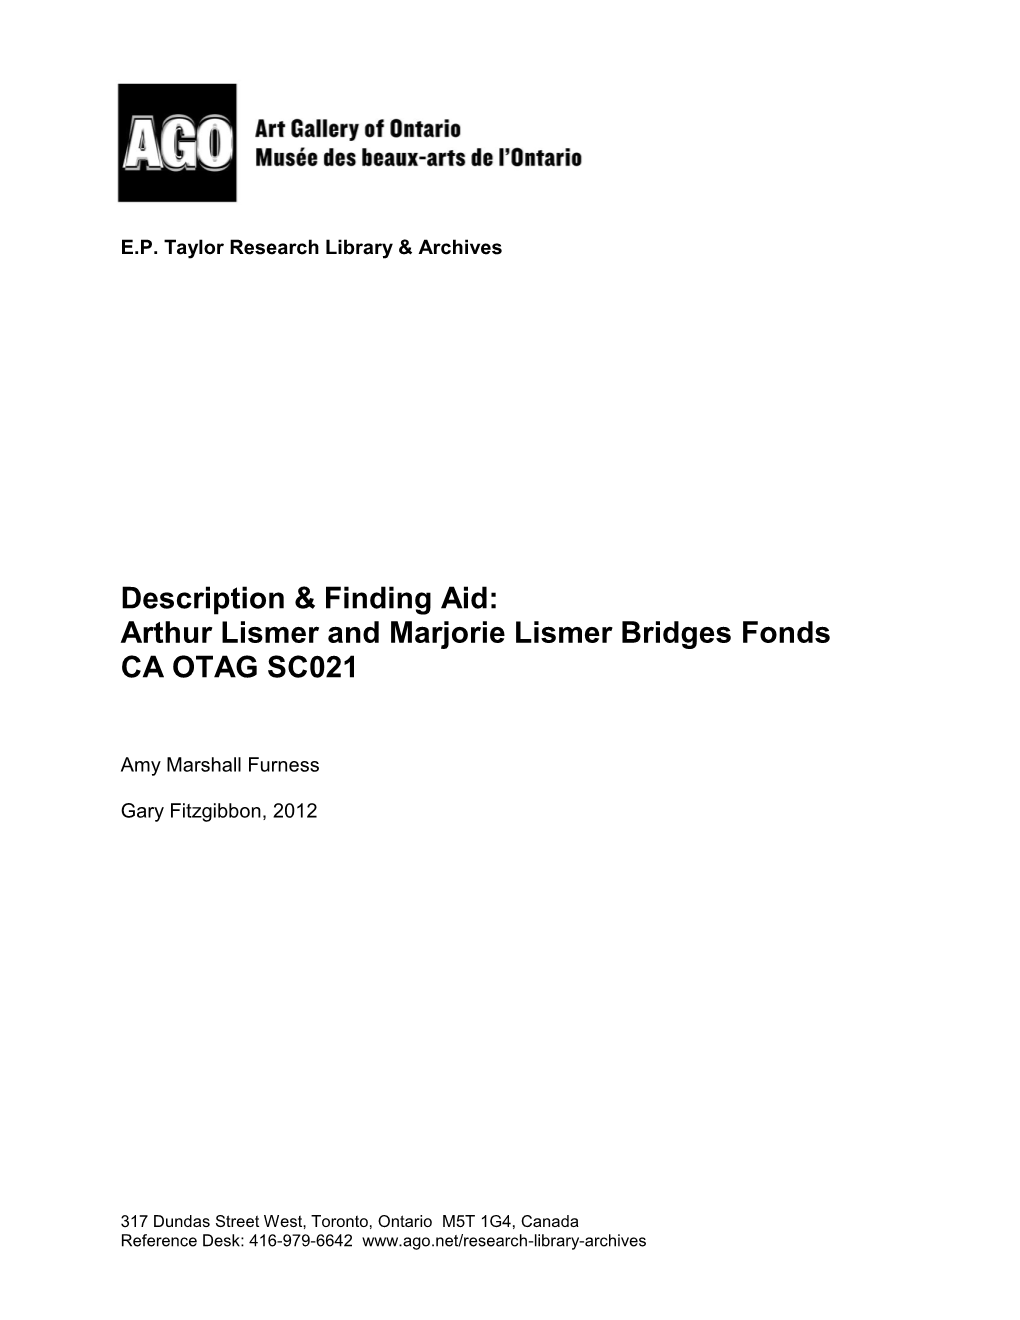 Arthur Lismer and Marjorie Lismer Bridges Fonds CA OTAG SC021